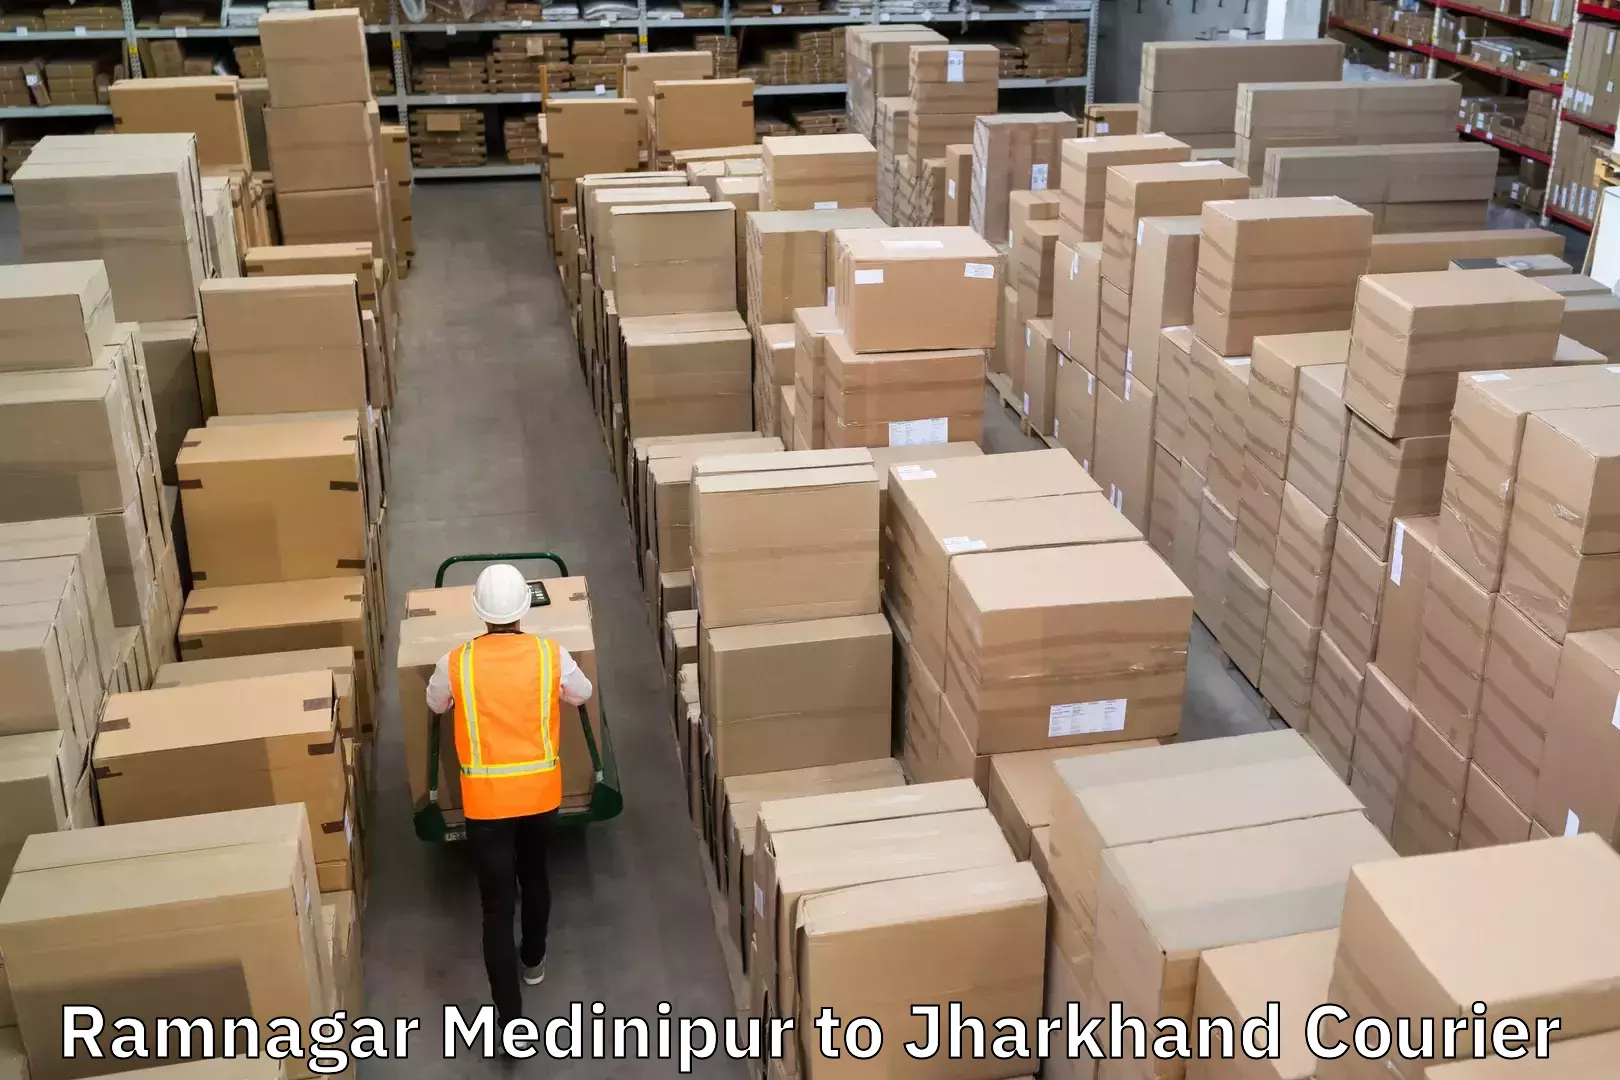 Express mail service Ramnagar Medinipur to Jharkhand